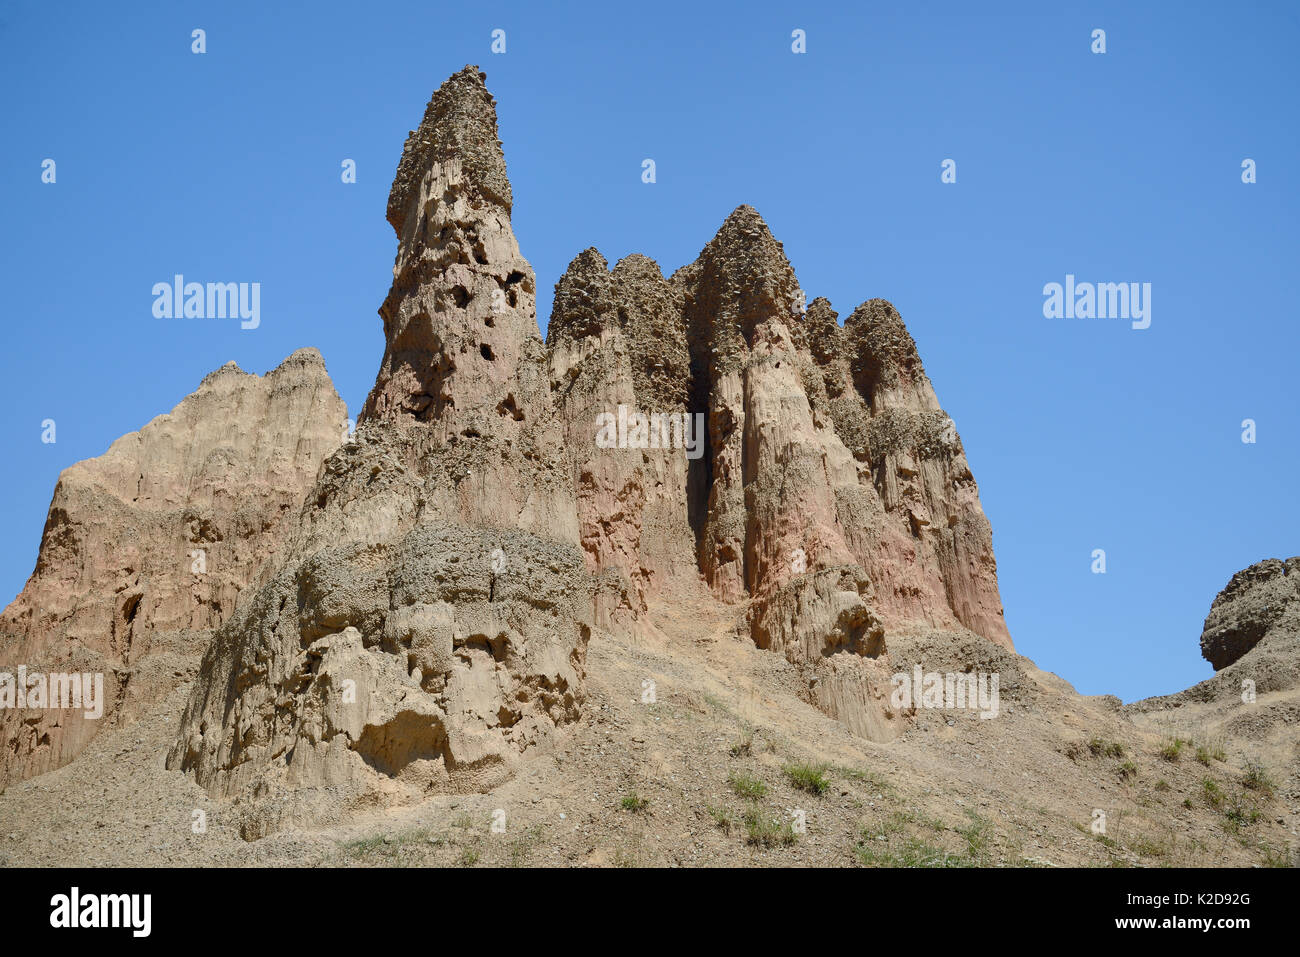 Towers of heavily eroded and weathered soft sandstone / conglomerate, Miljevina, near Foca, Bosnia and Herzegovina, July 2015 Stock Photo